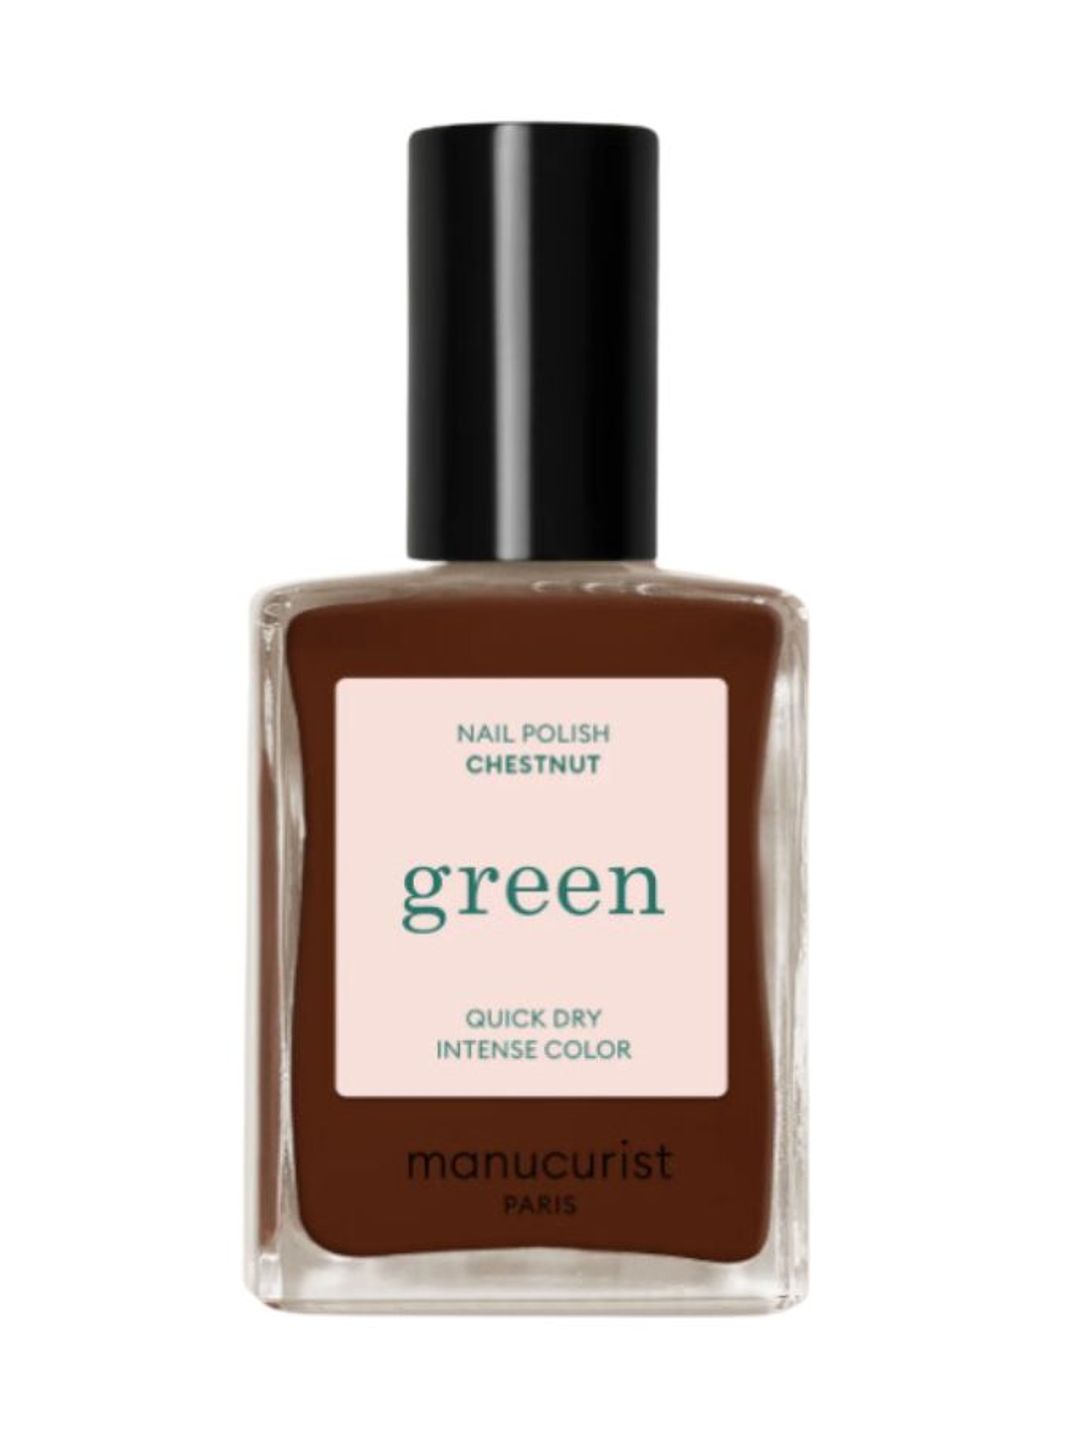 Green Nail Polish in 'Chestnut' - Manucurist 